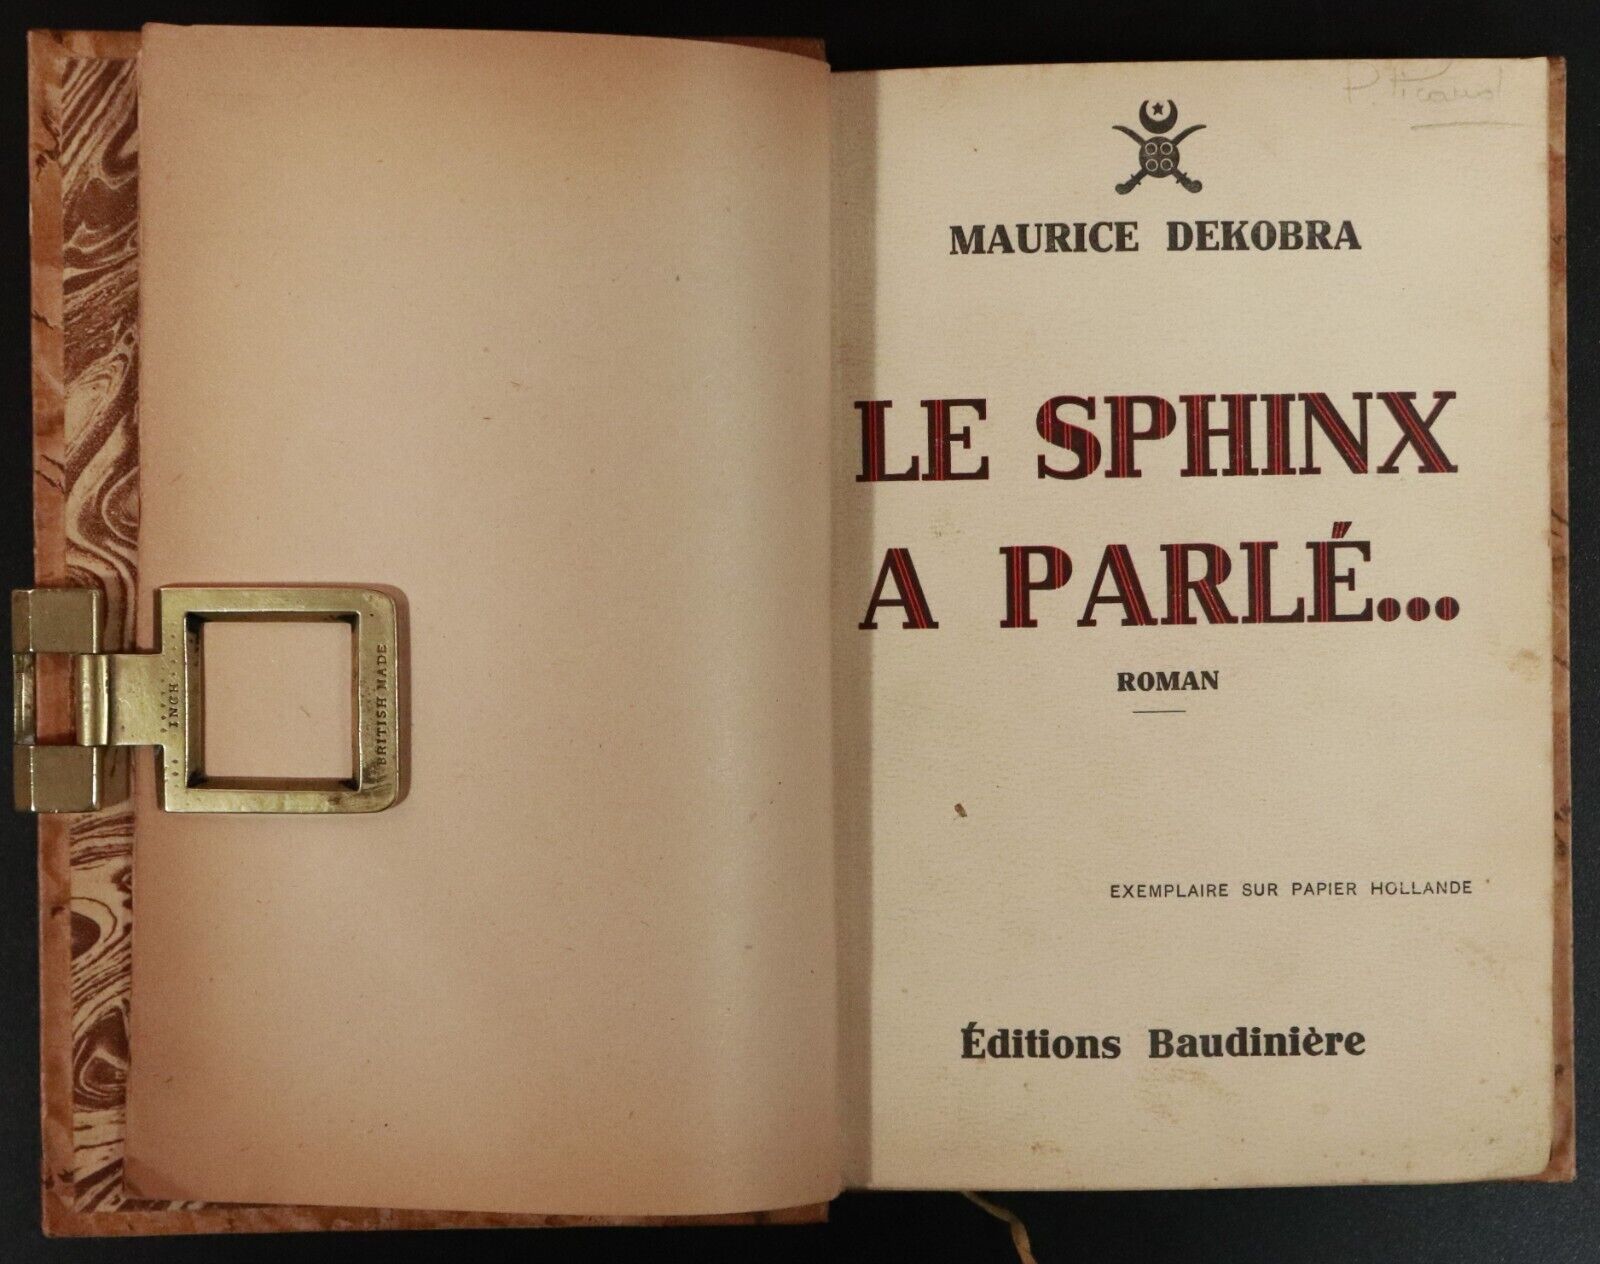 1931 Le Sphinx A Parle by M Dekobra Ltd Edition French Fiction Book Fine Binding - 0